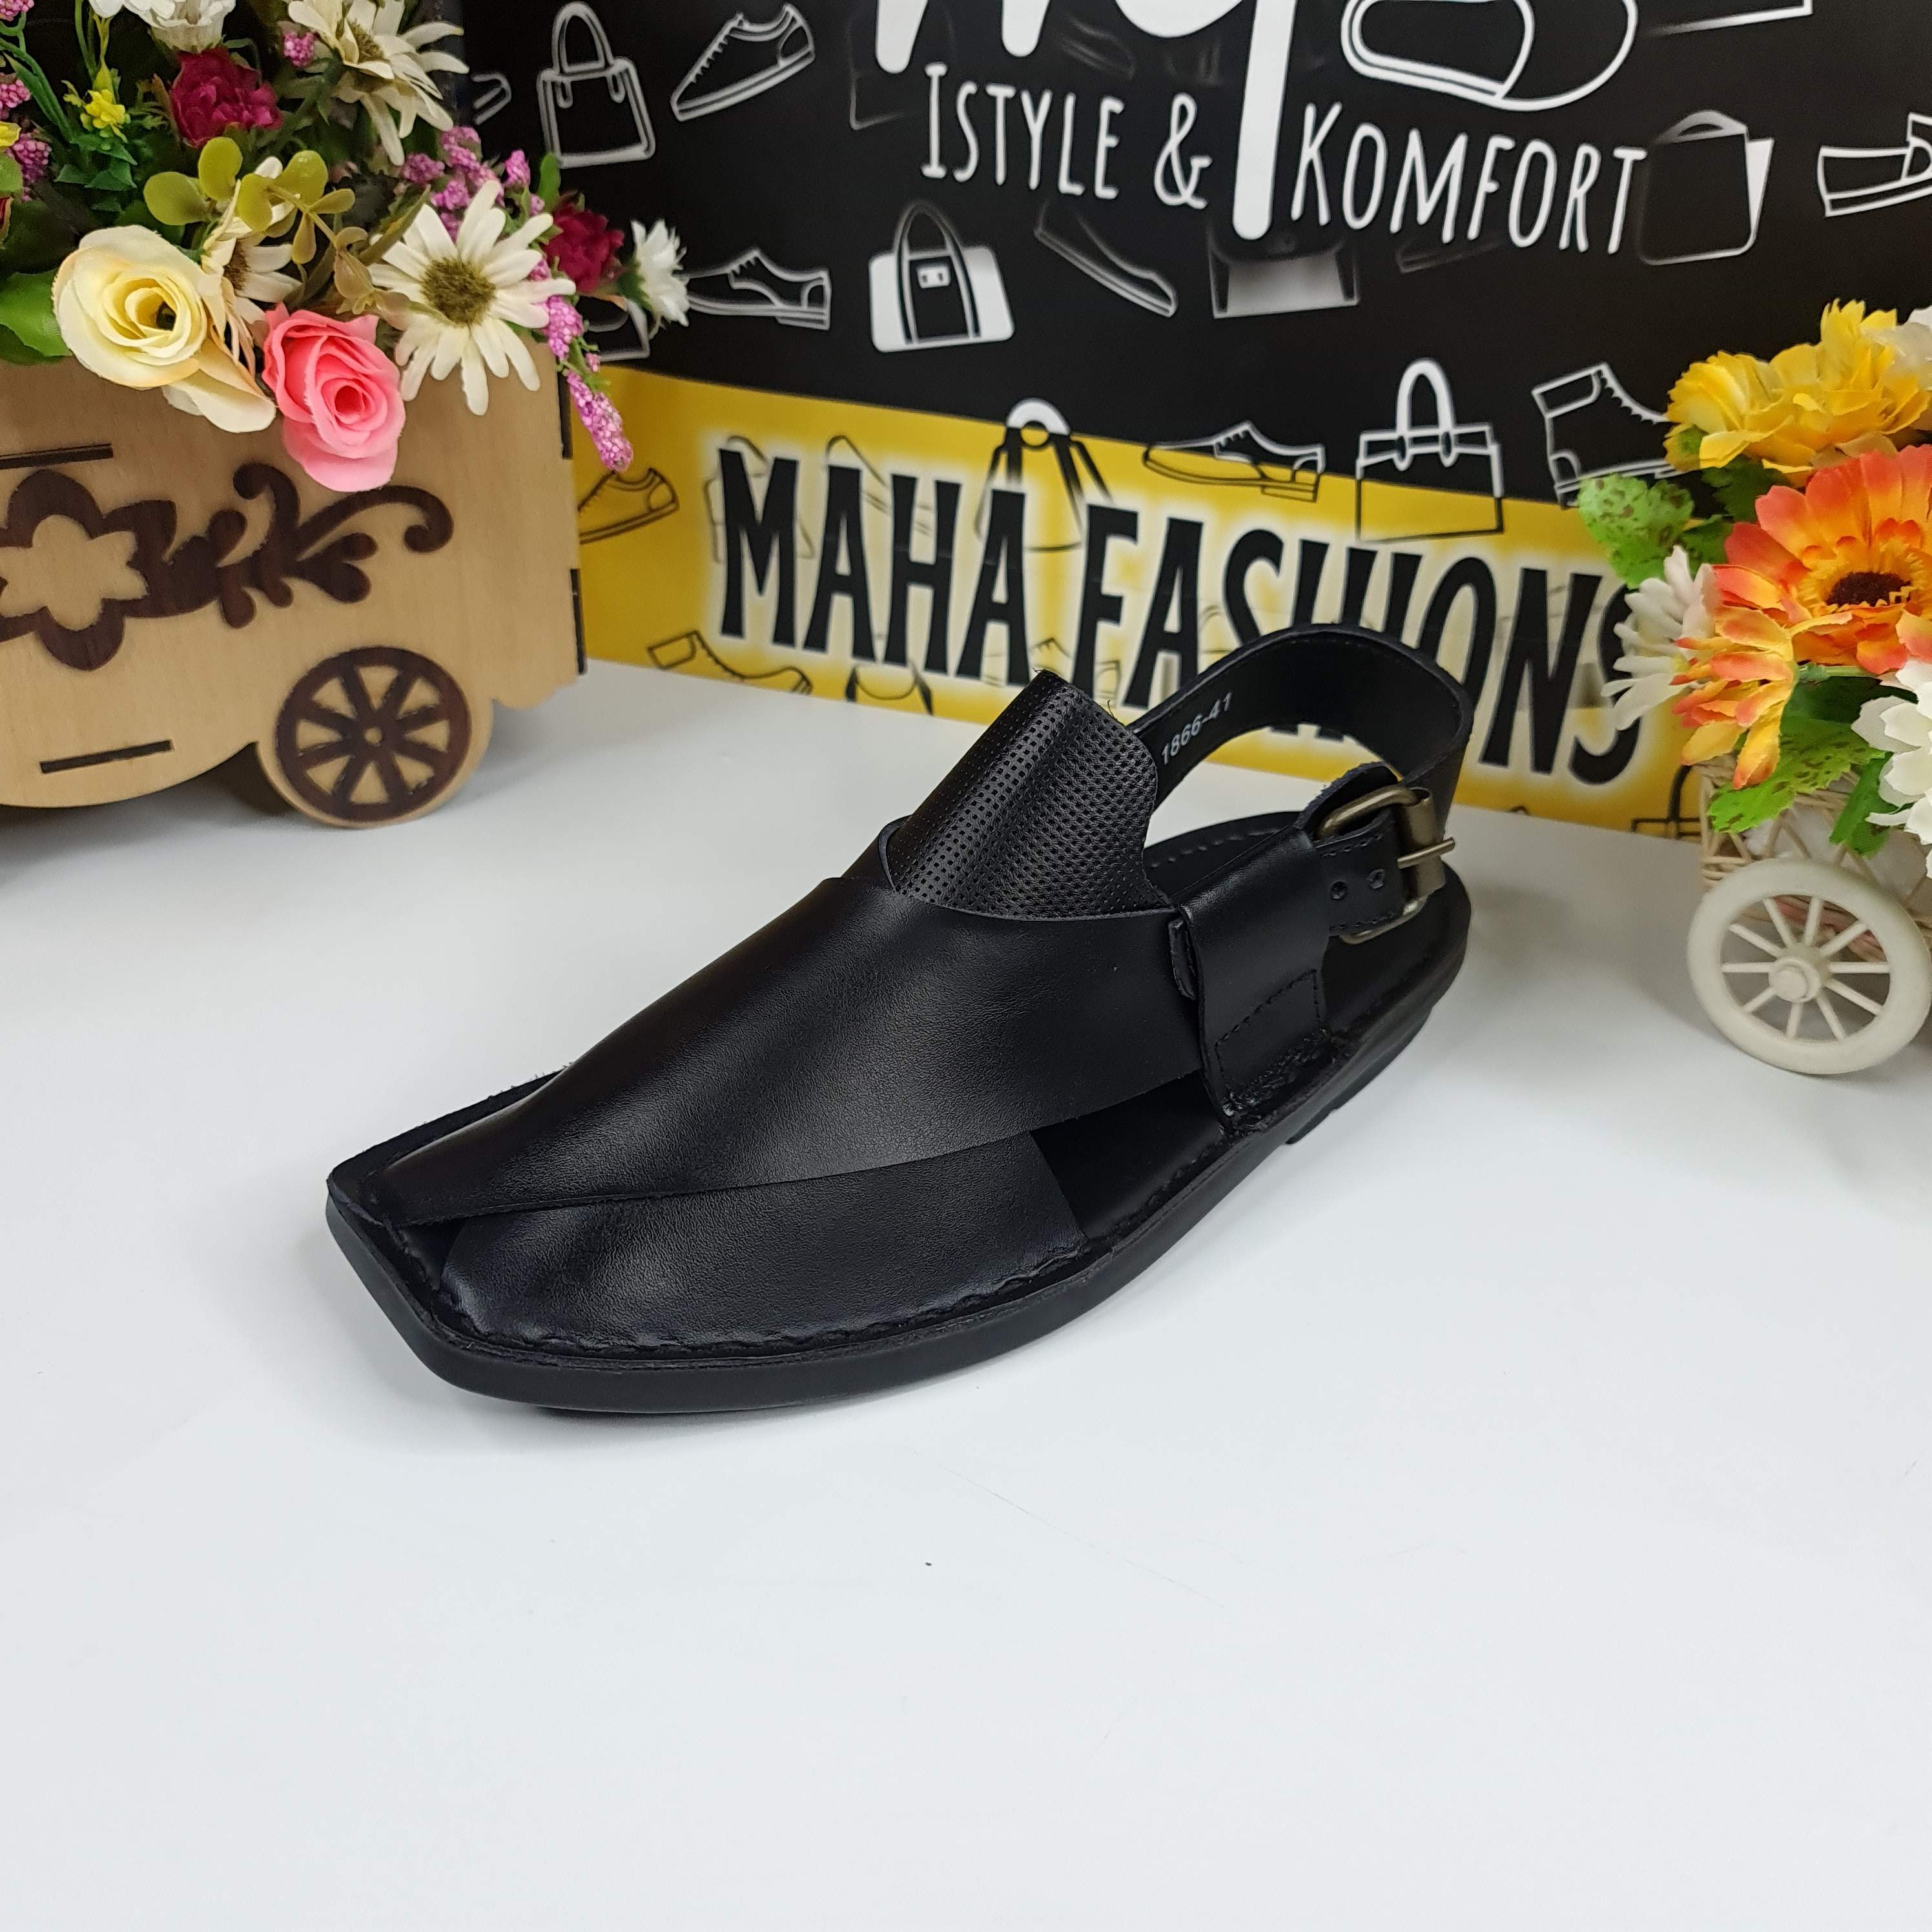 Black Casual Peshawri Sandals - Maha fashions -  